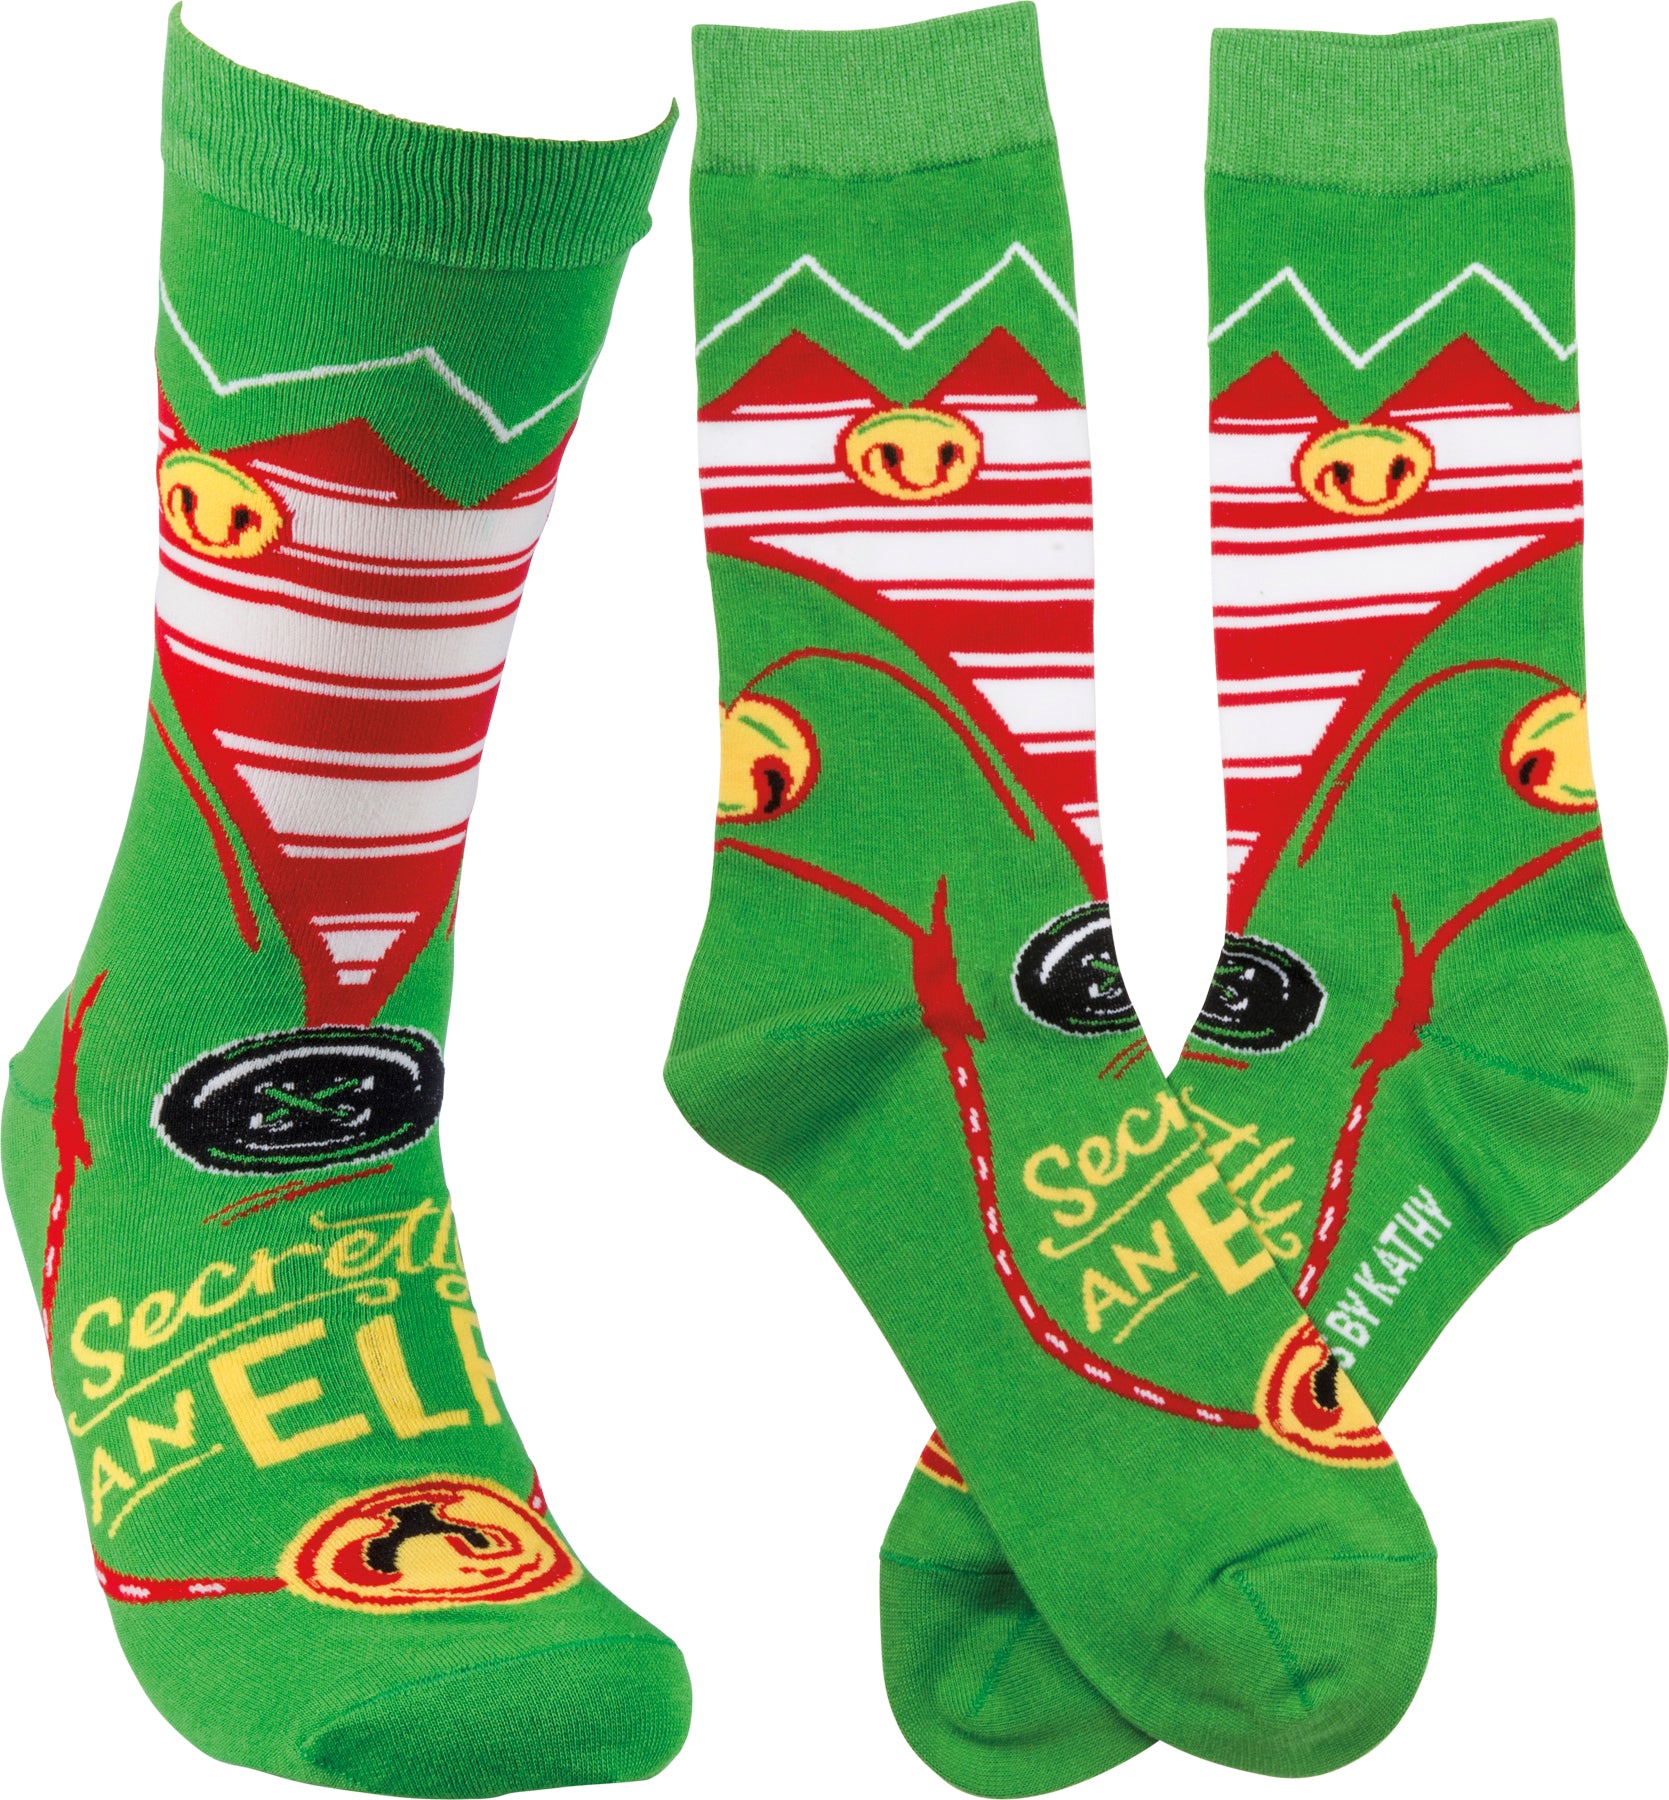 Secretly An Elf Socks